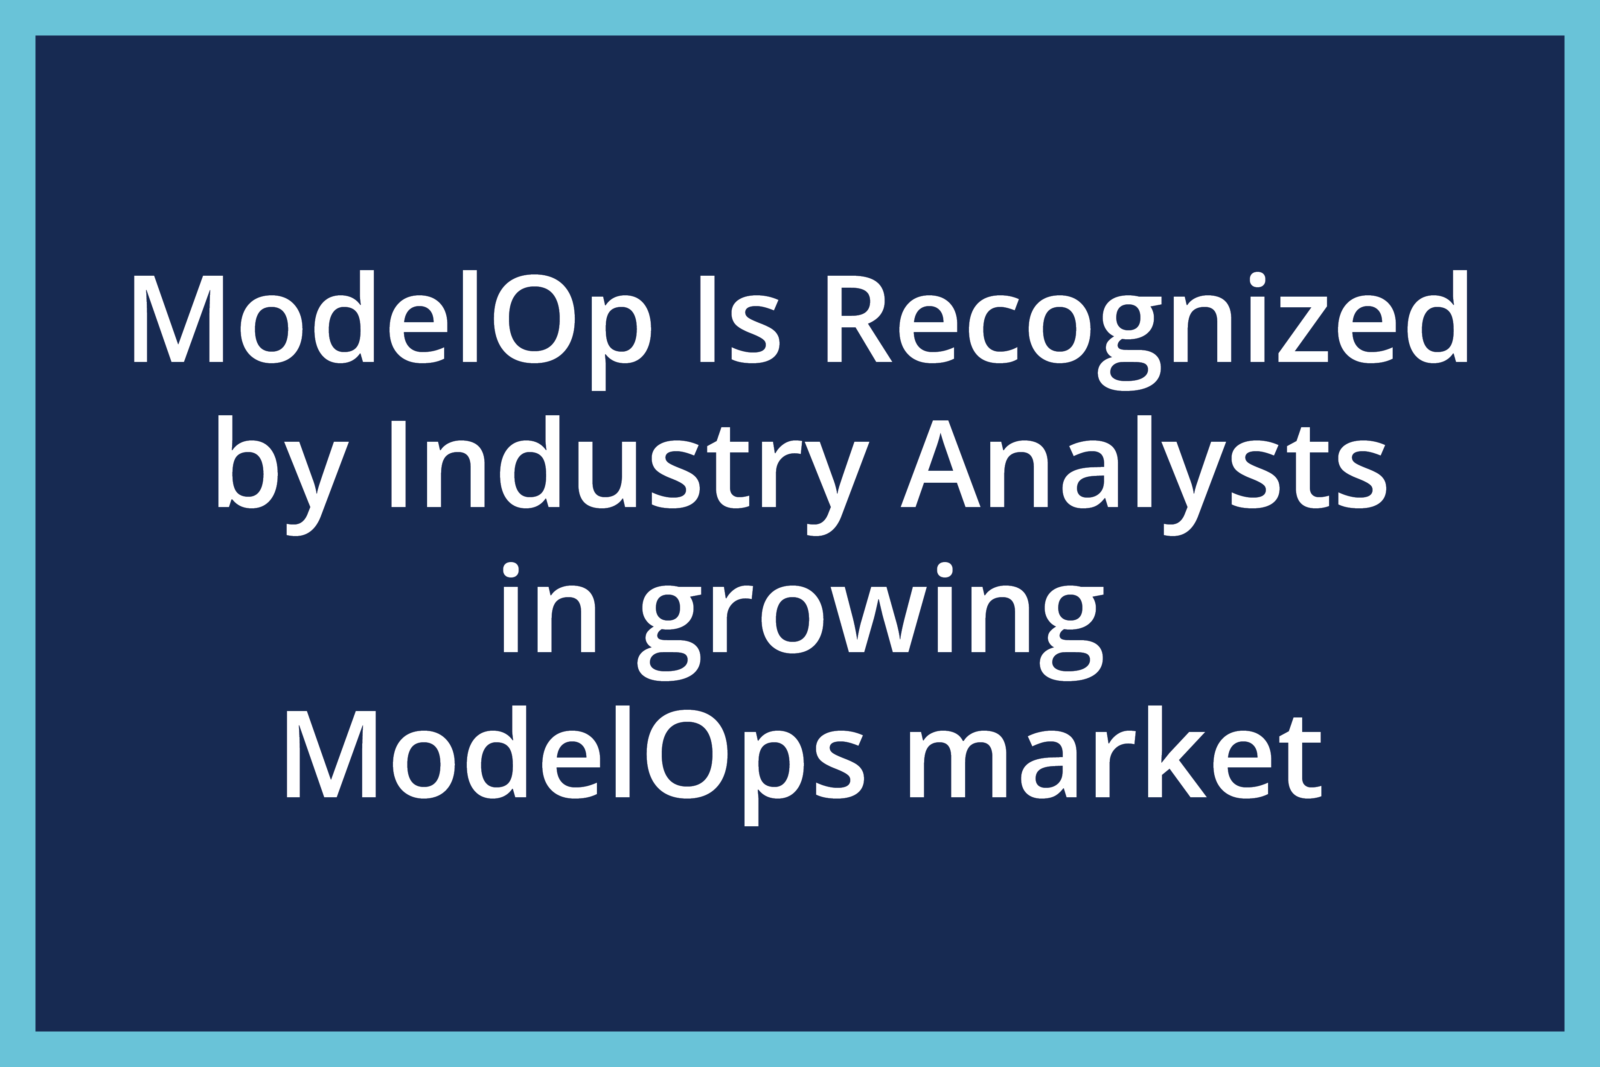 Industry Analysts Recognize ModelOp in Growing ModelOps Market